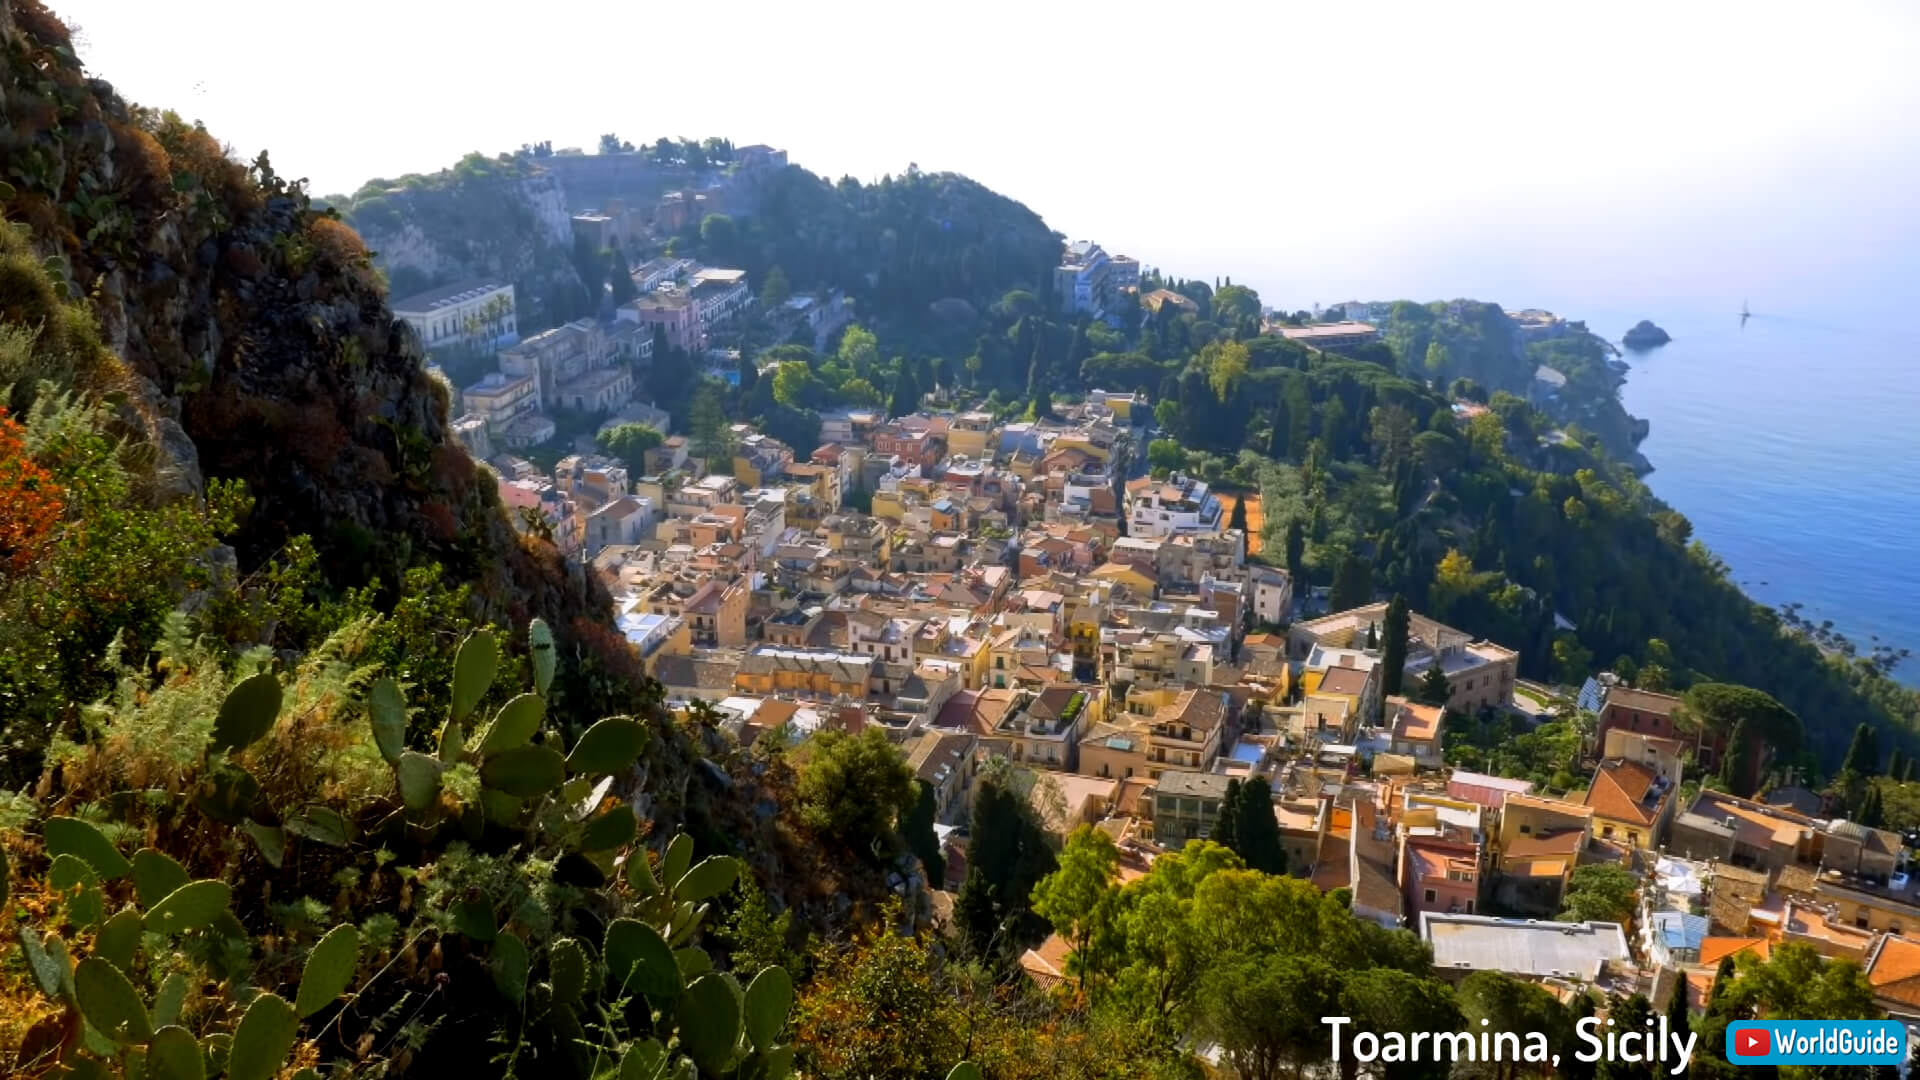 Toarmina, Sicily